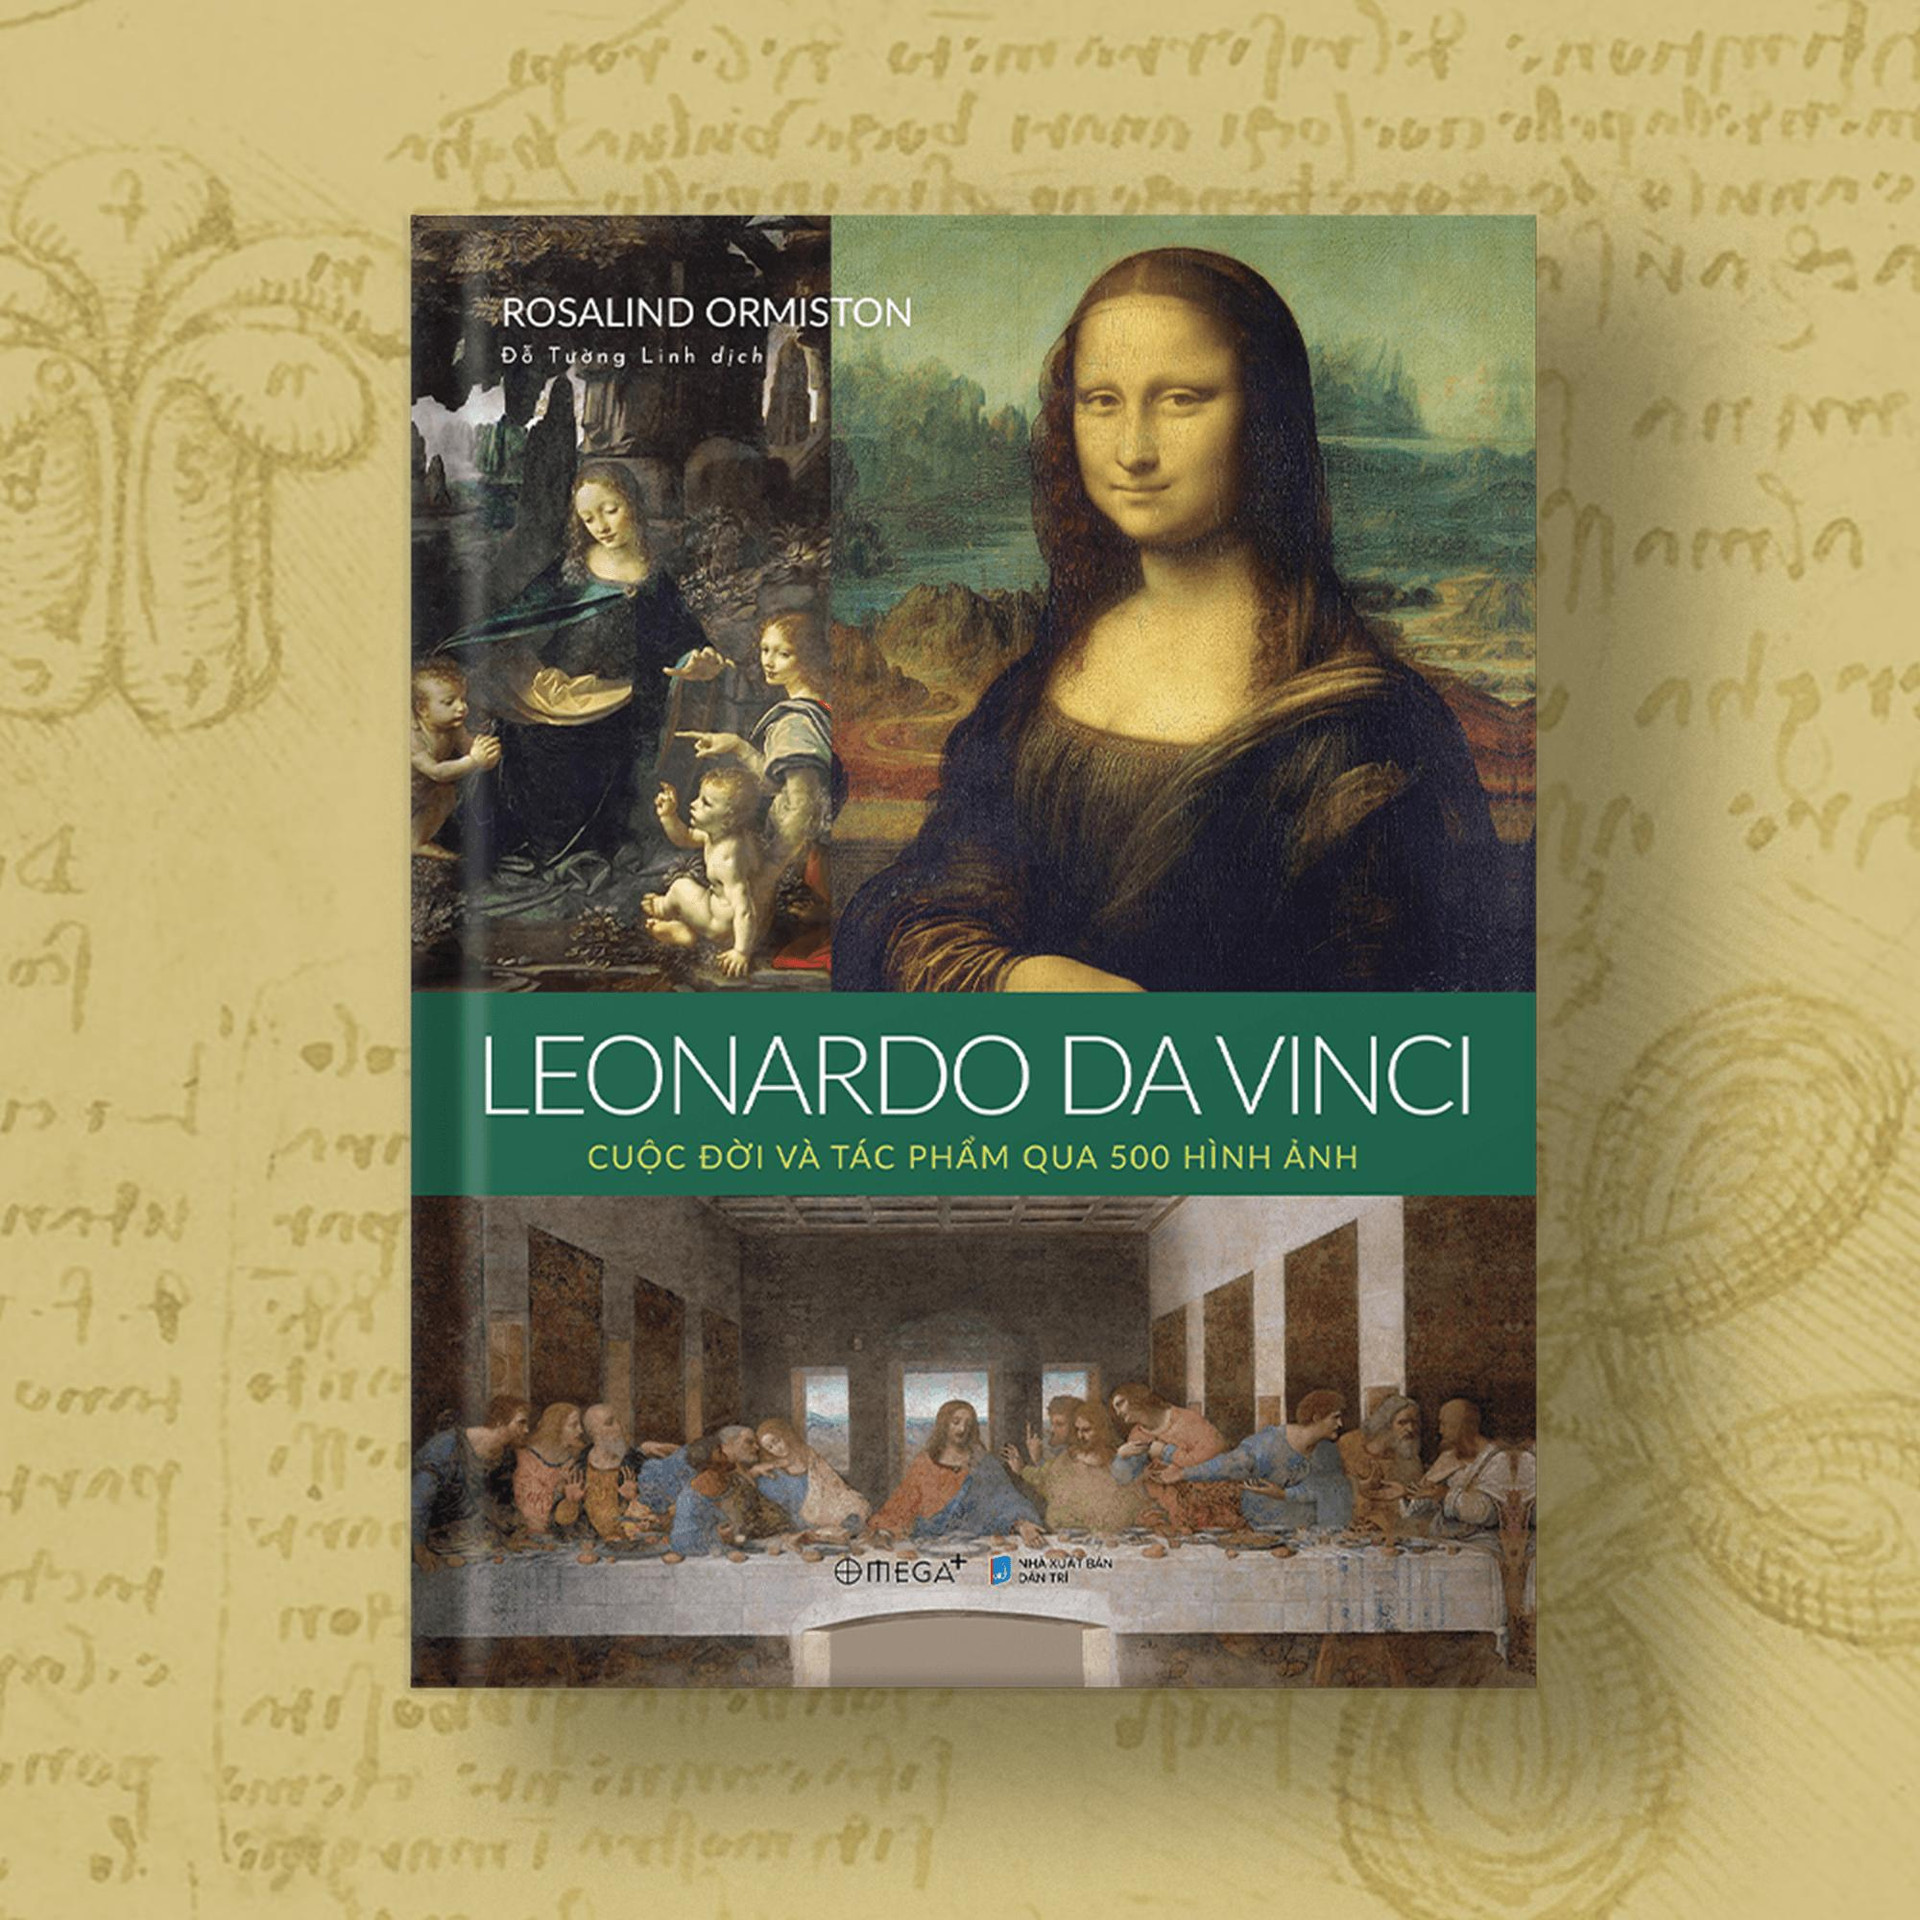 Ra mắt sách về danh hoạ Leonardo da Vinci - Ảnh 1.